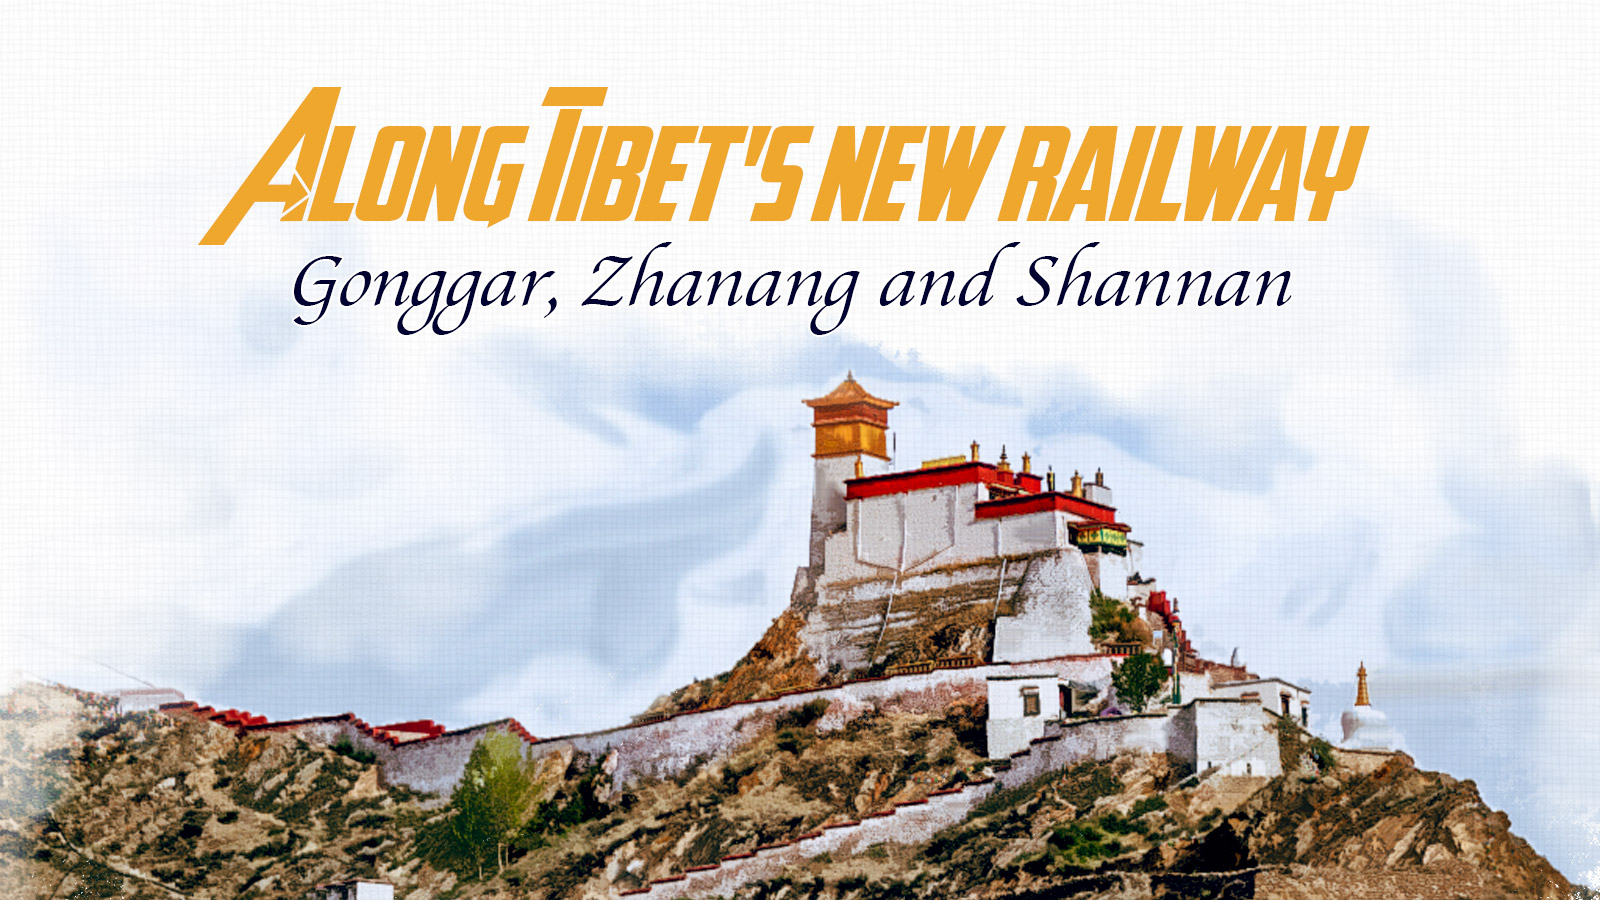 Along Tibet's New Railway: Birthplace of Tibetan culture, Shannan